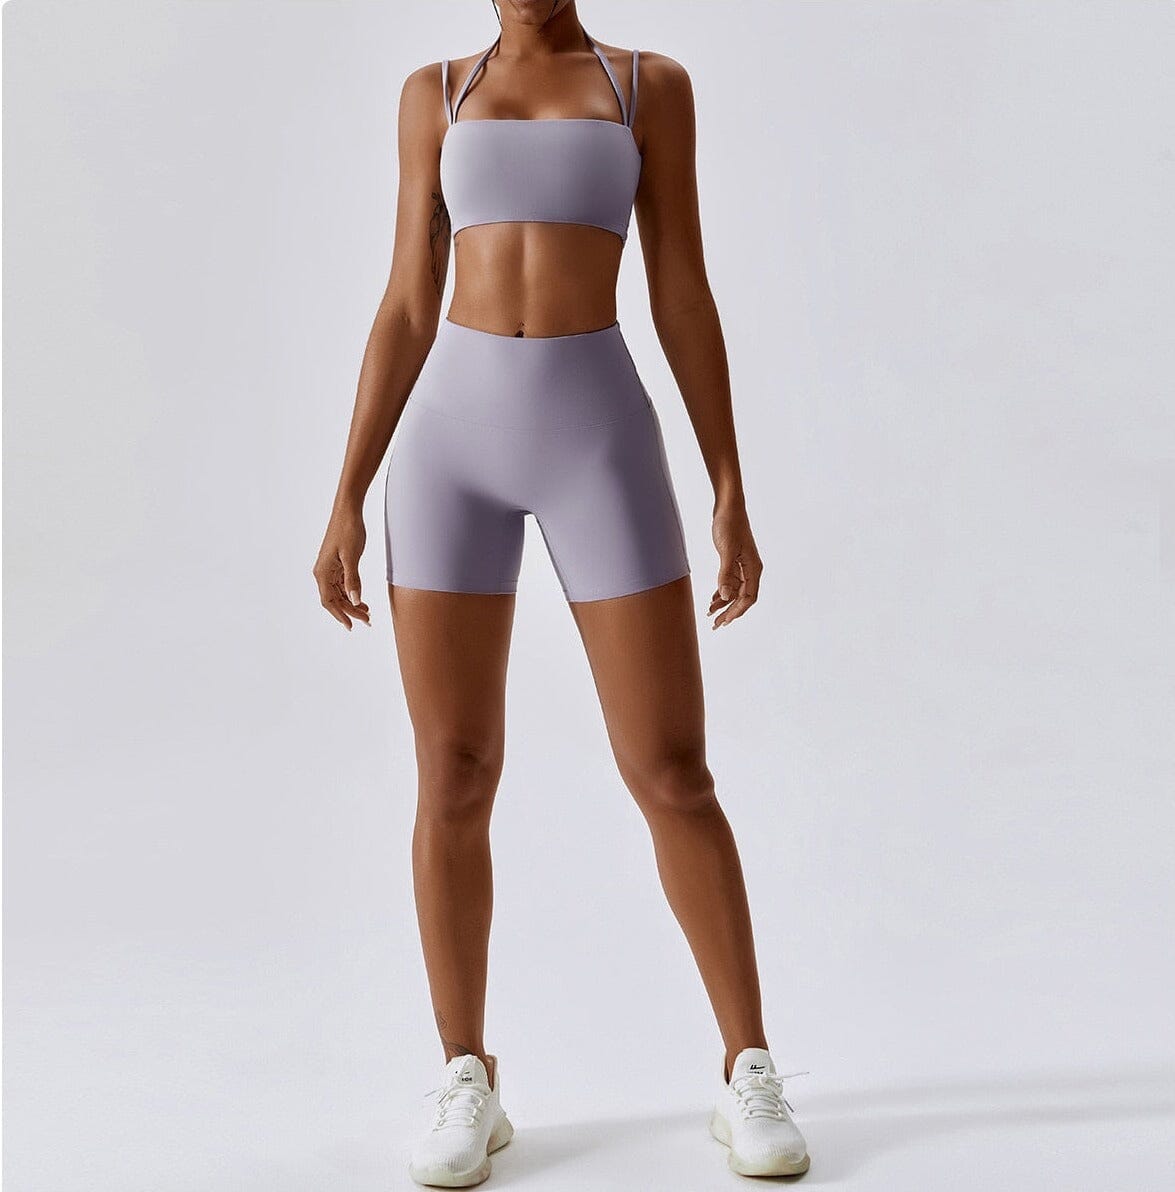 Maximum Yoga Set - Shorts + Top Sets Starlethics Gray Shorts Set S 